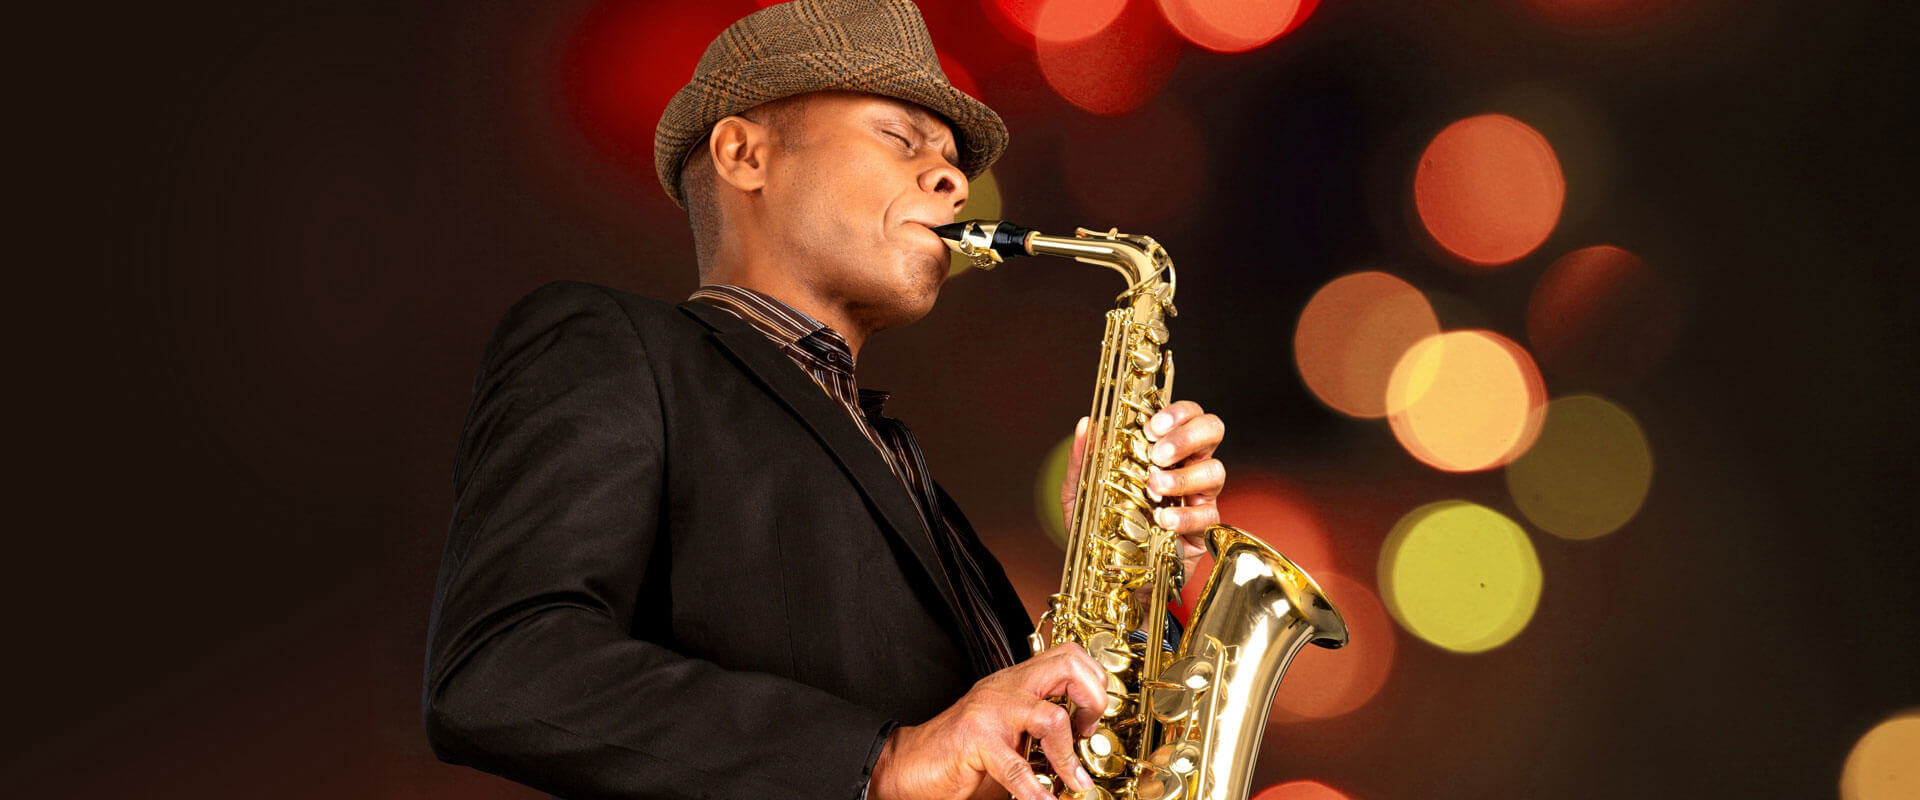 Saxophone Lessons Chicago, IL